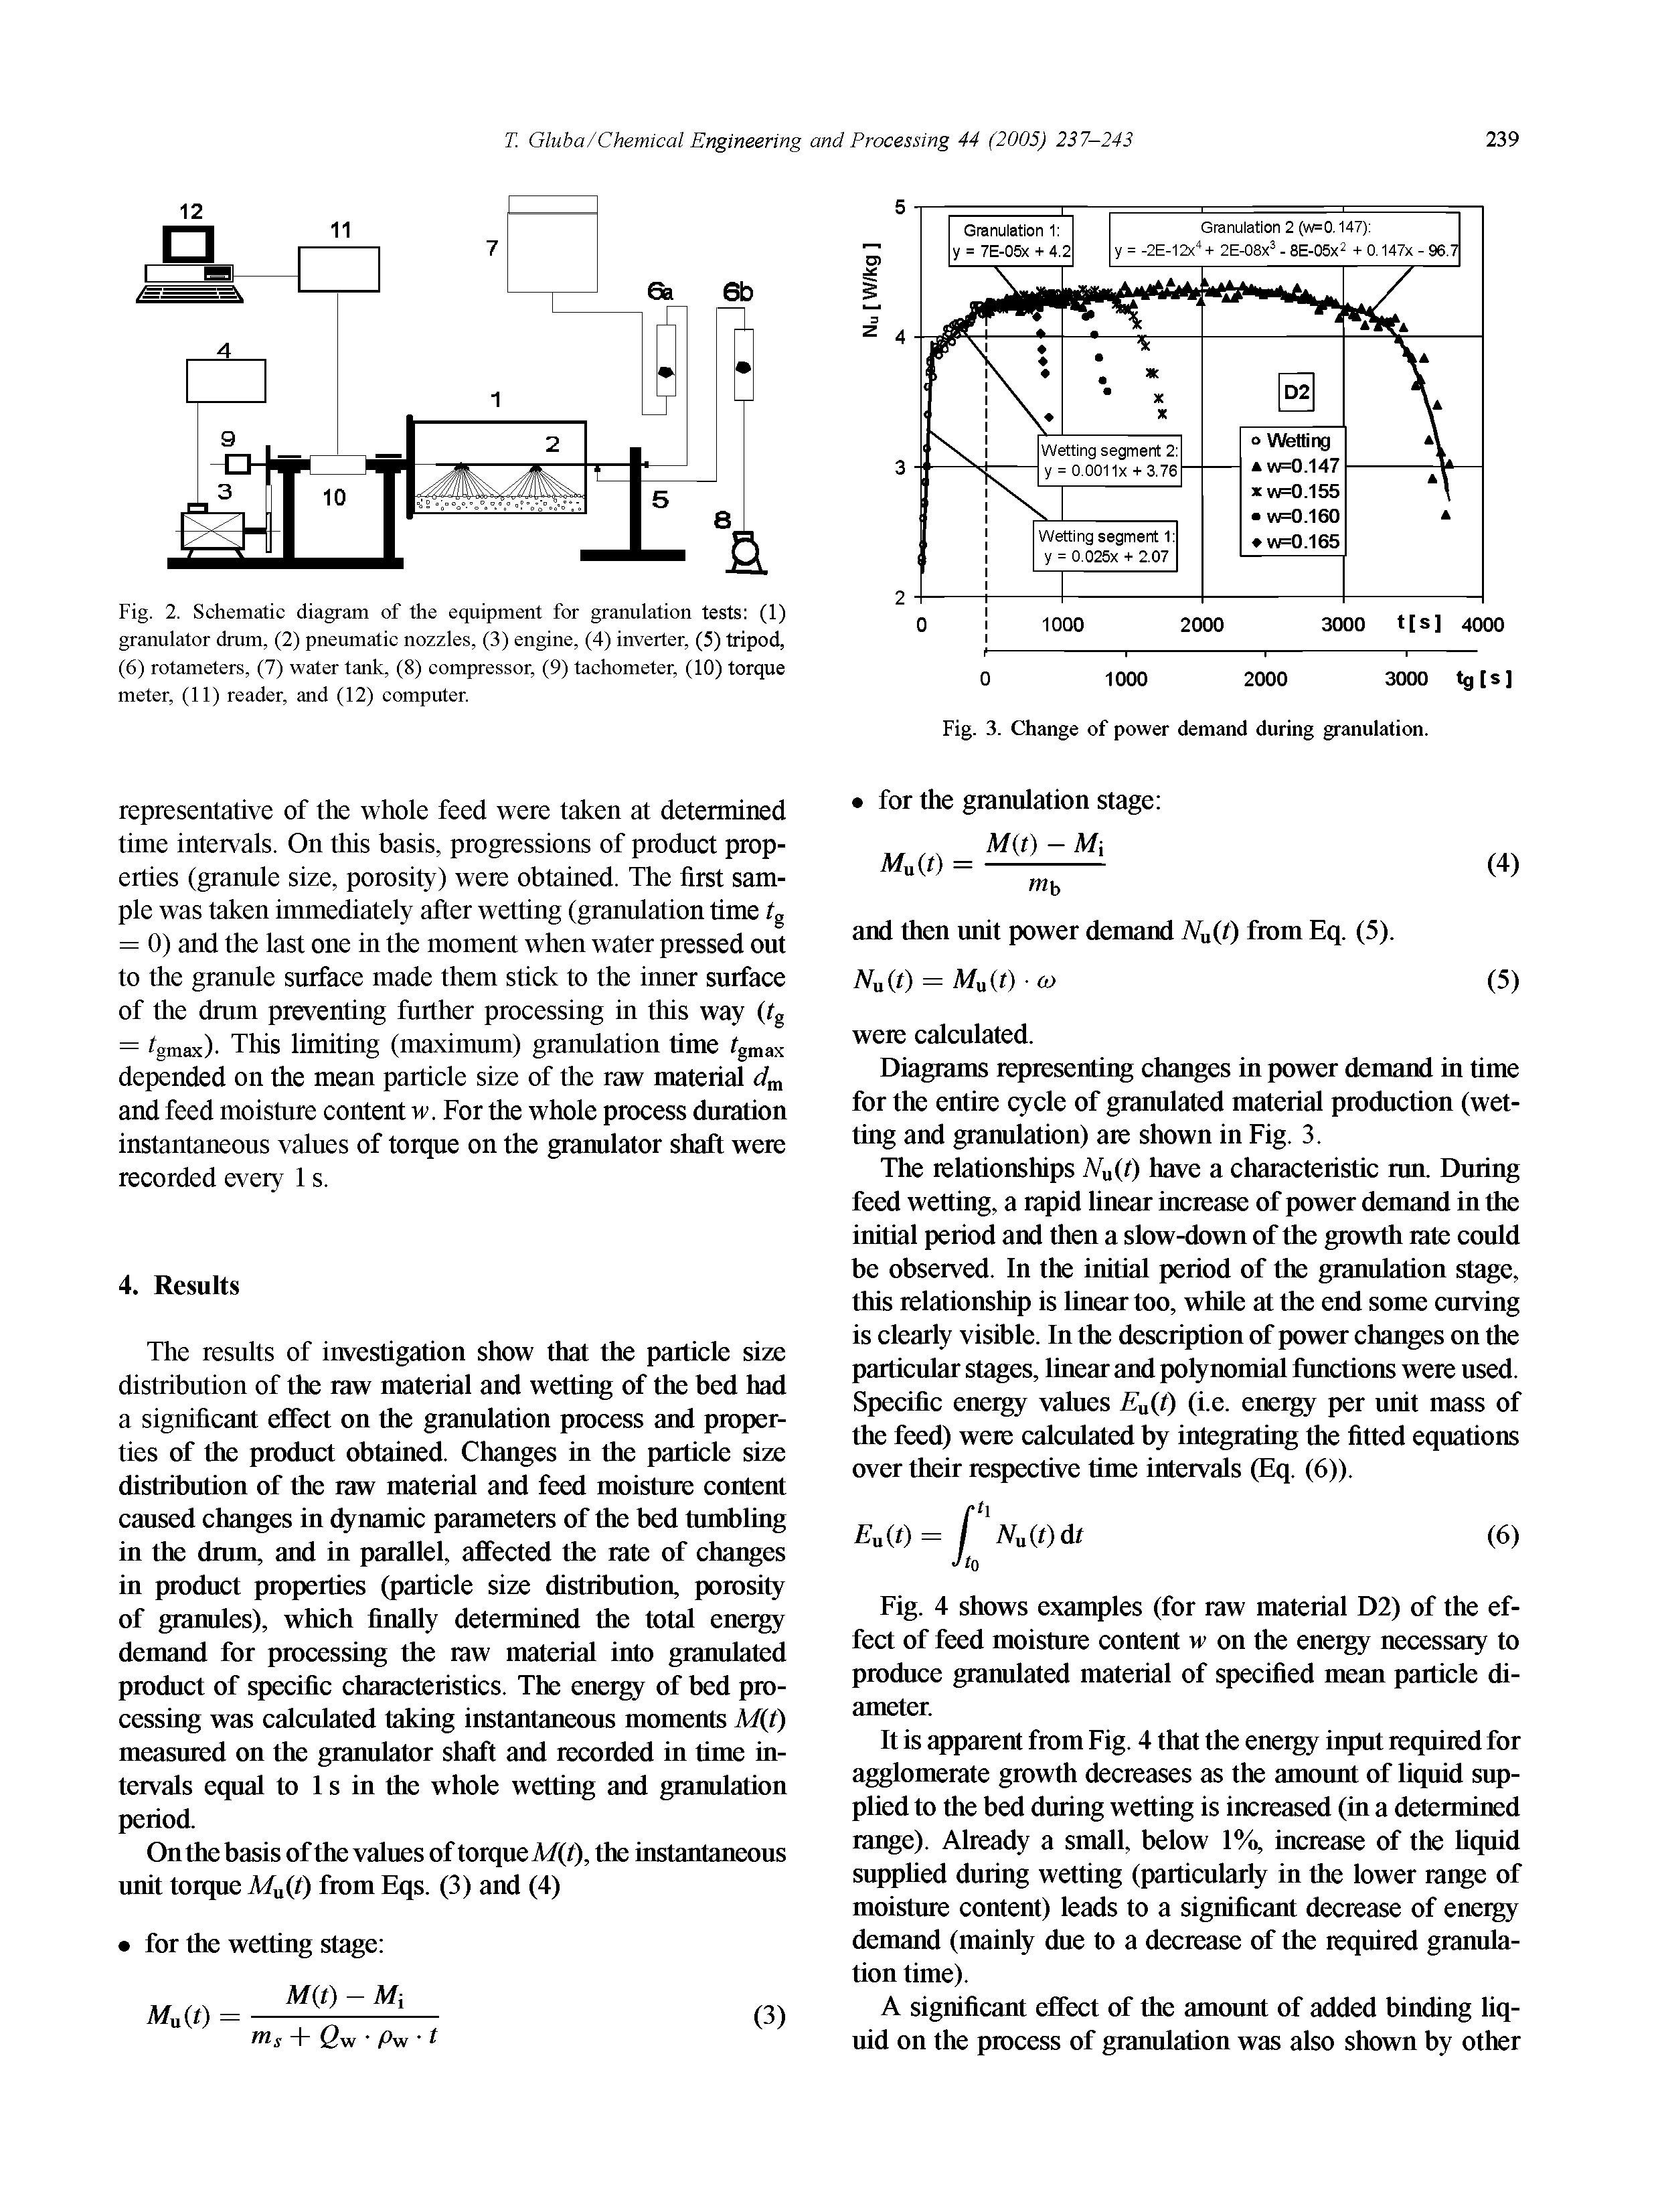 Fig. 2. Schematic diagram of the equipment for granulation tests (1) granulator drum, (2) pneumatic nozzles, (3) engine, (4) inverter, (5) tripod, (6) rotameters, (7) water tank, (8) compressor, (9) tachometer, (10) torque meter, (11) reader, and (12) computer.